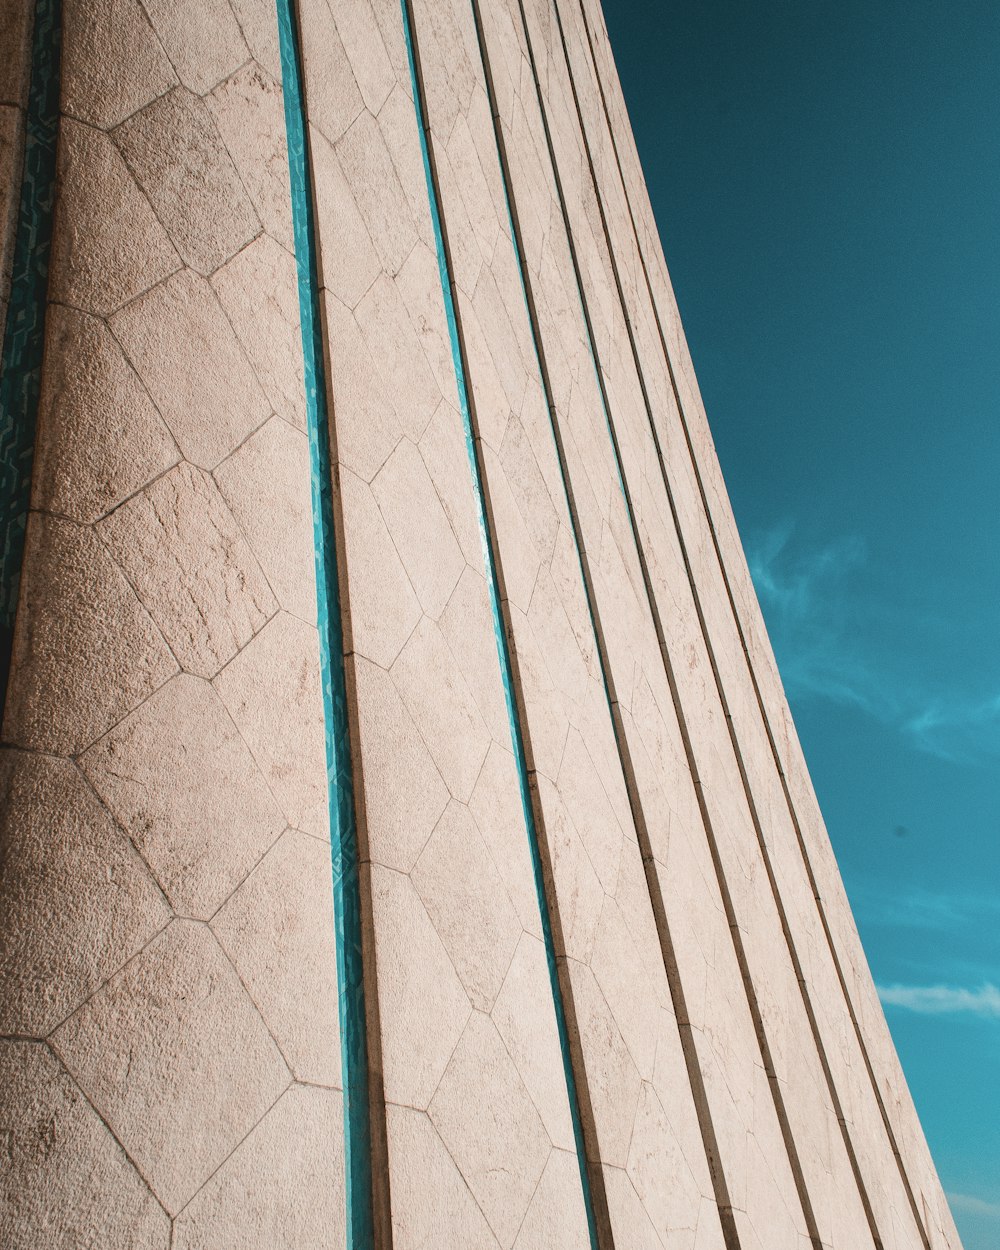 edifício de concreto cinza sob o céu azul durante o dia